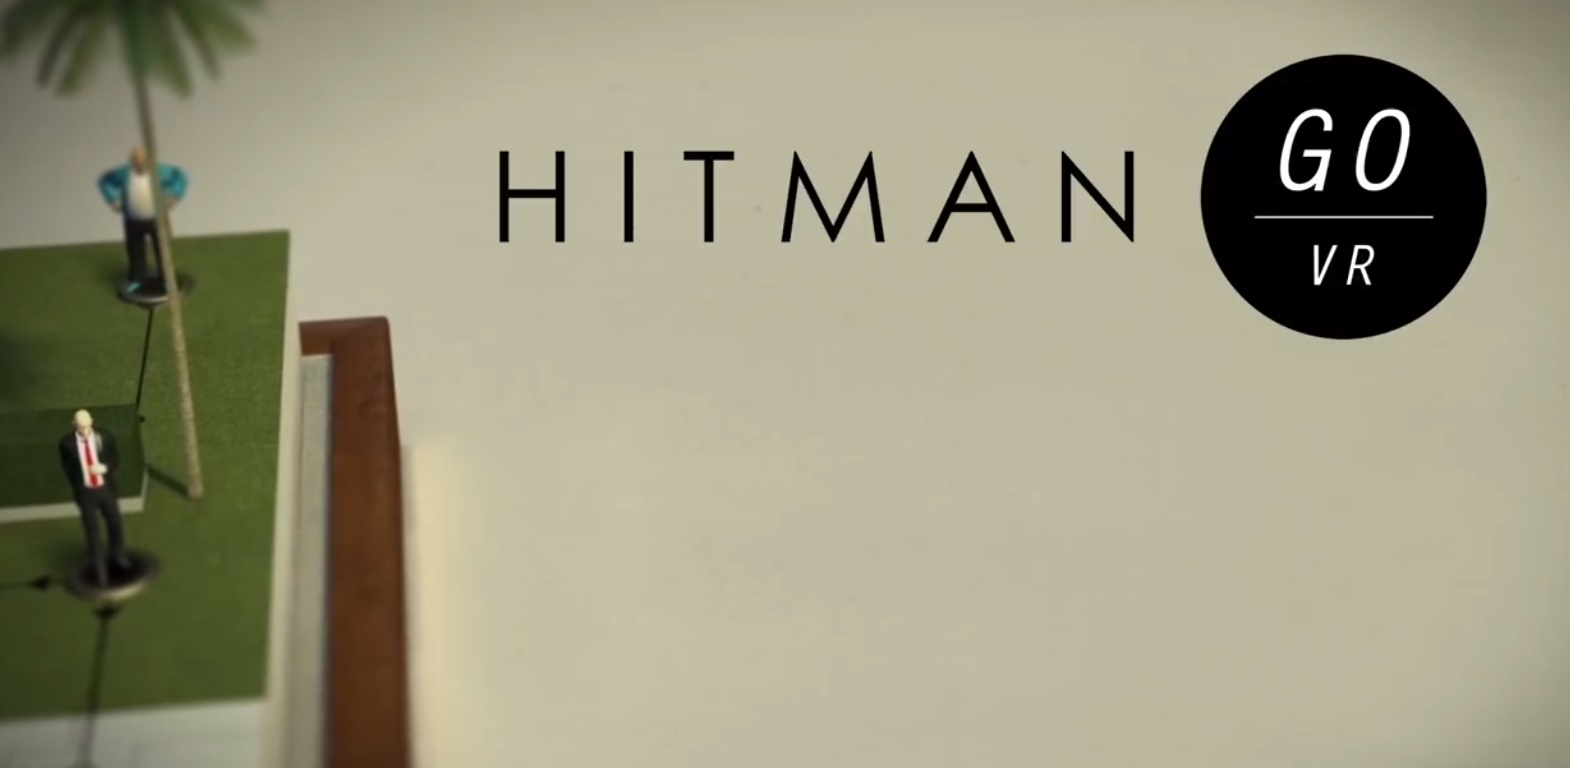 Hitman GO for Gear VR